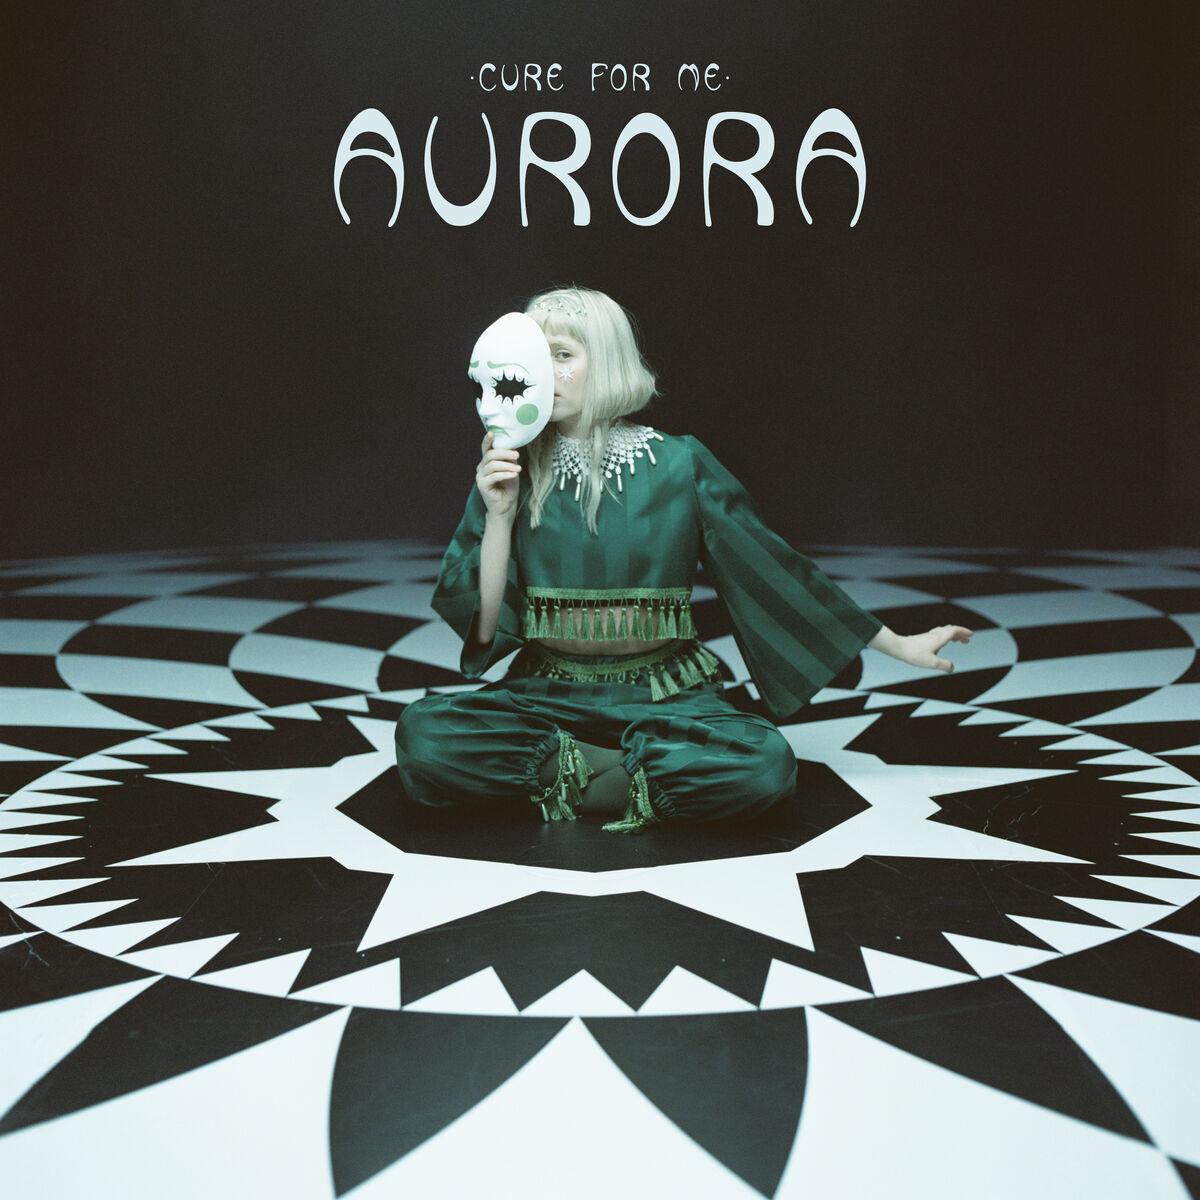 Aurora - Cure For Me by erroclaranotfound on DeviantArt